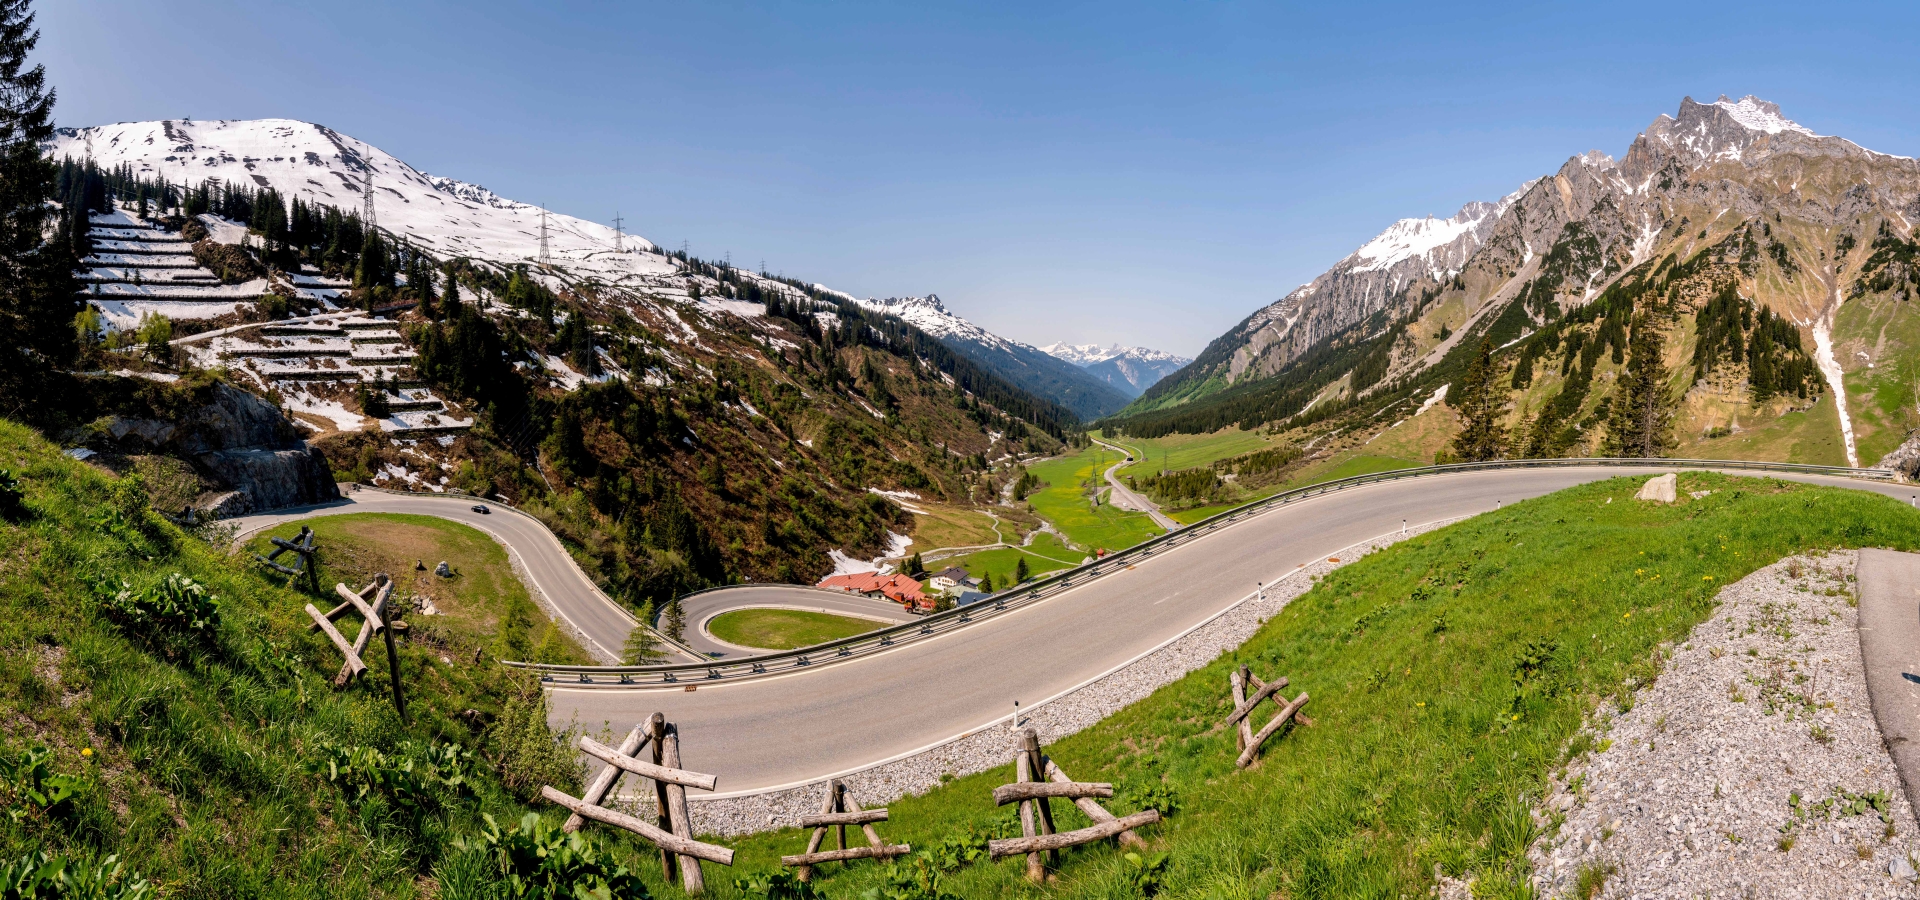 Arlberg pass road in austria